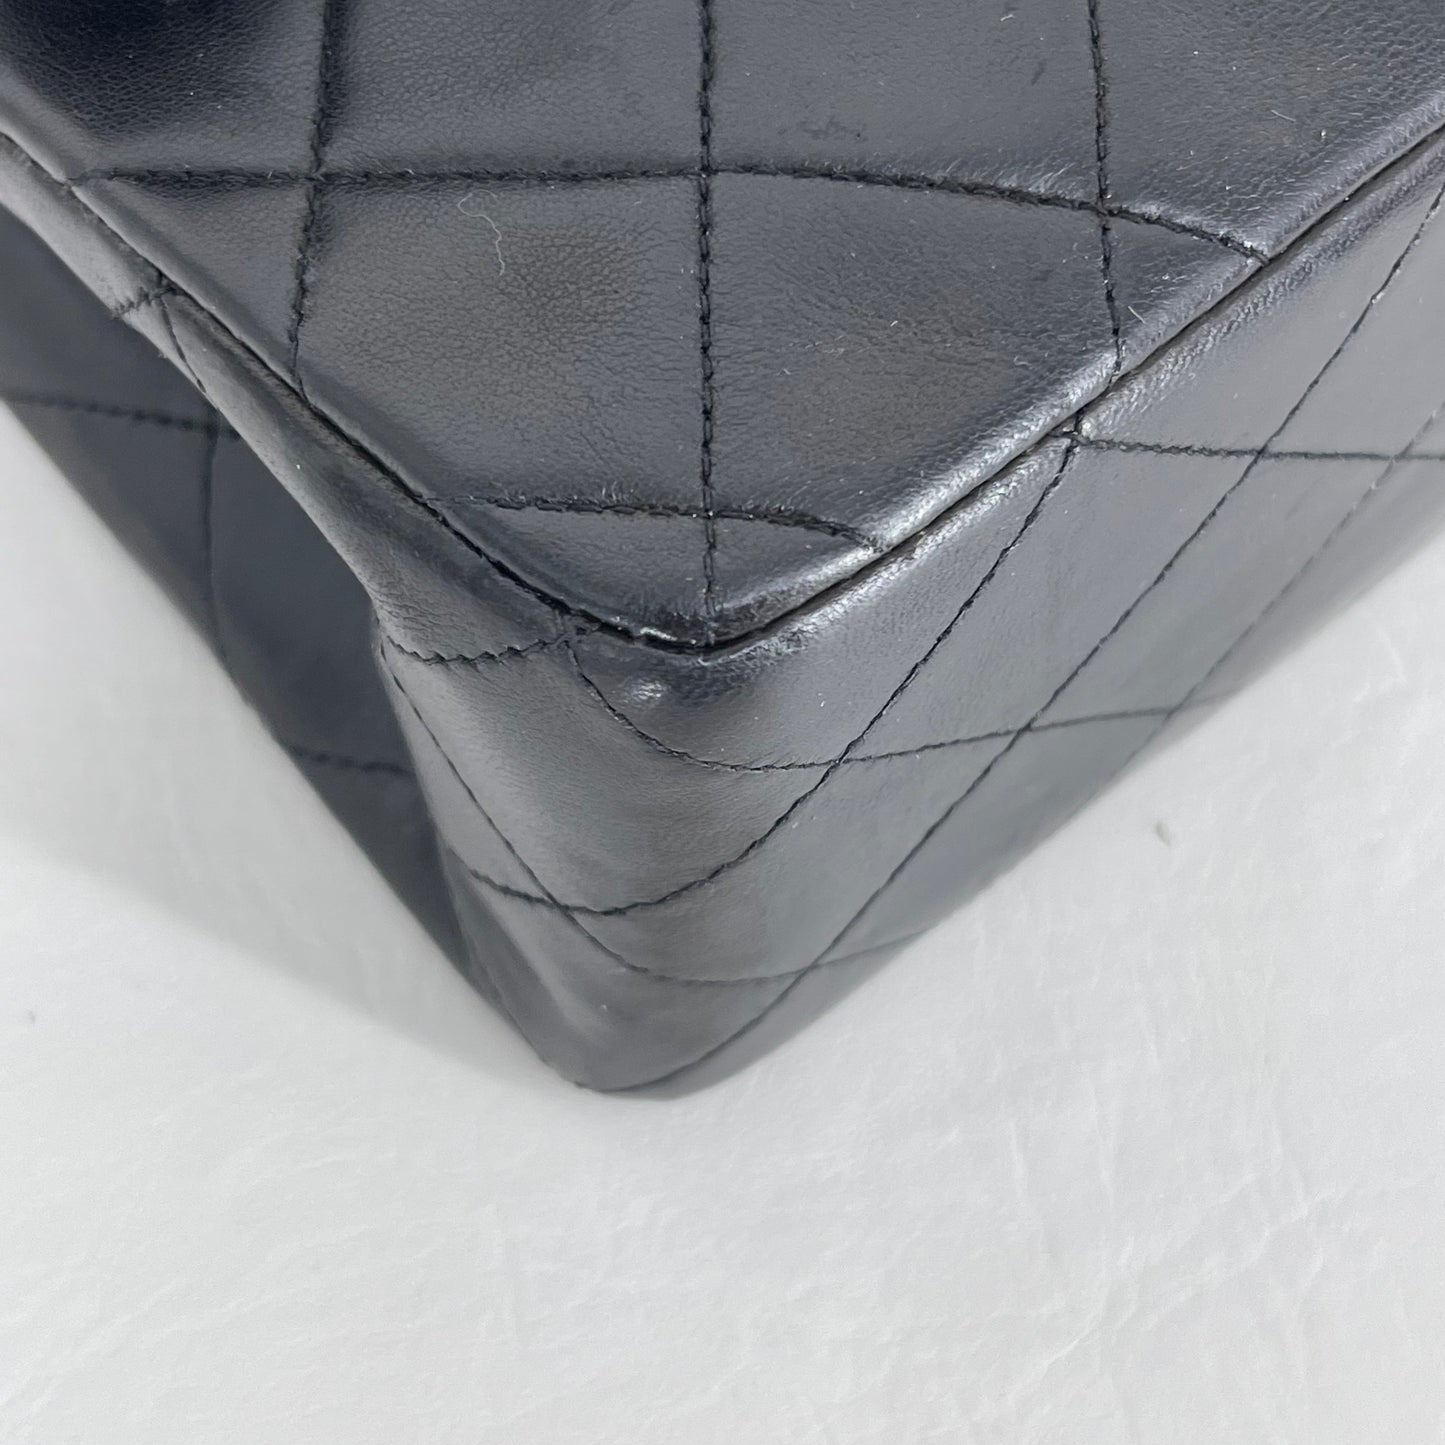 Authentic Chanel Black Lambskin 10” Double Flap Bag